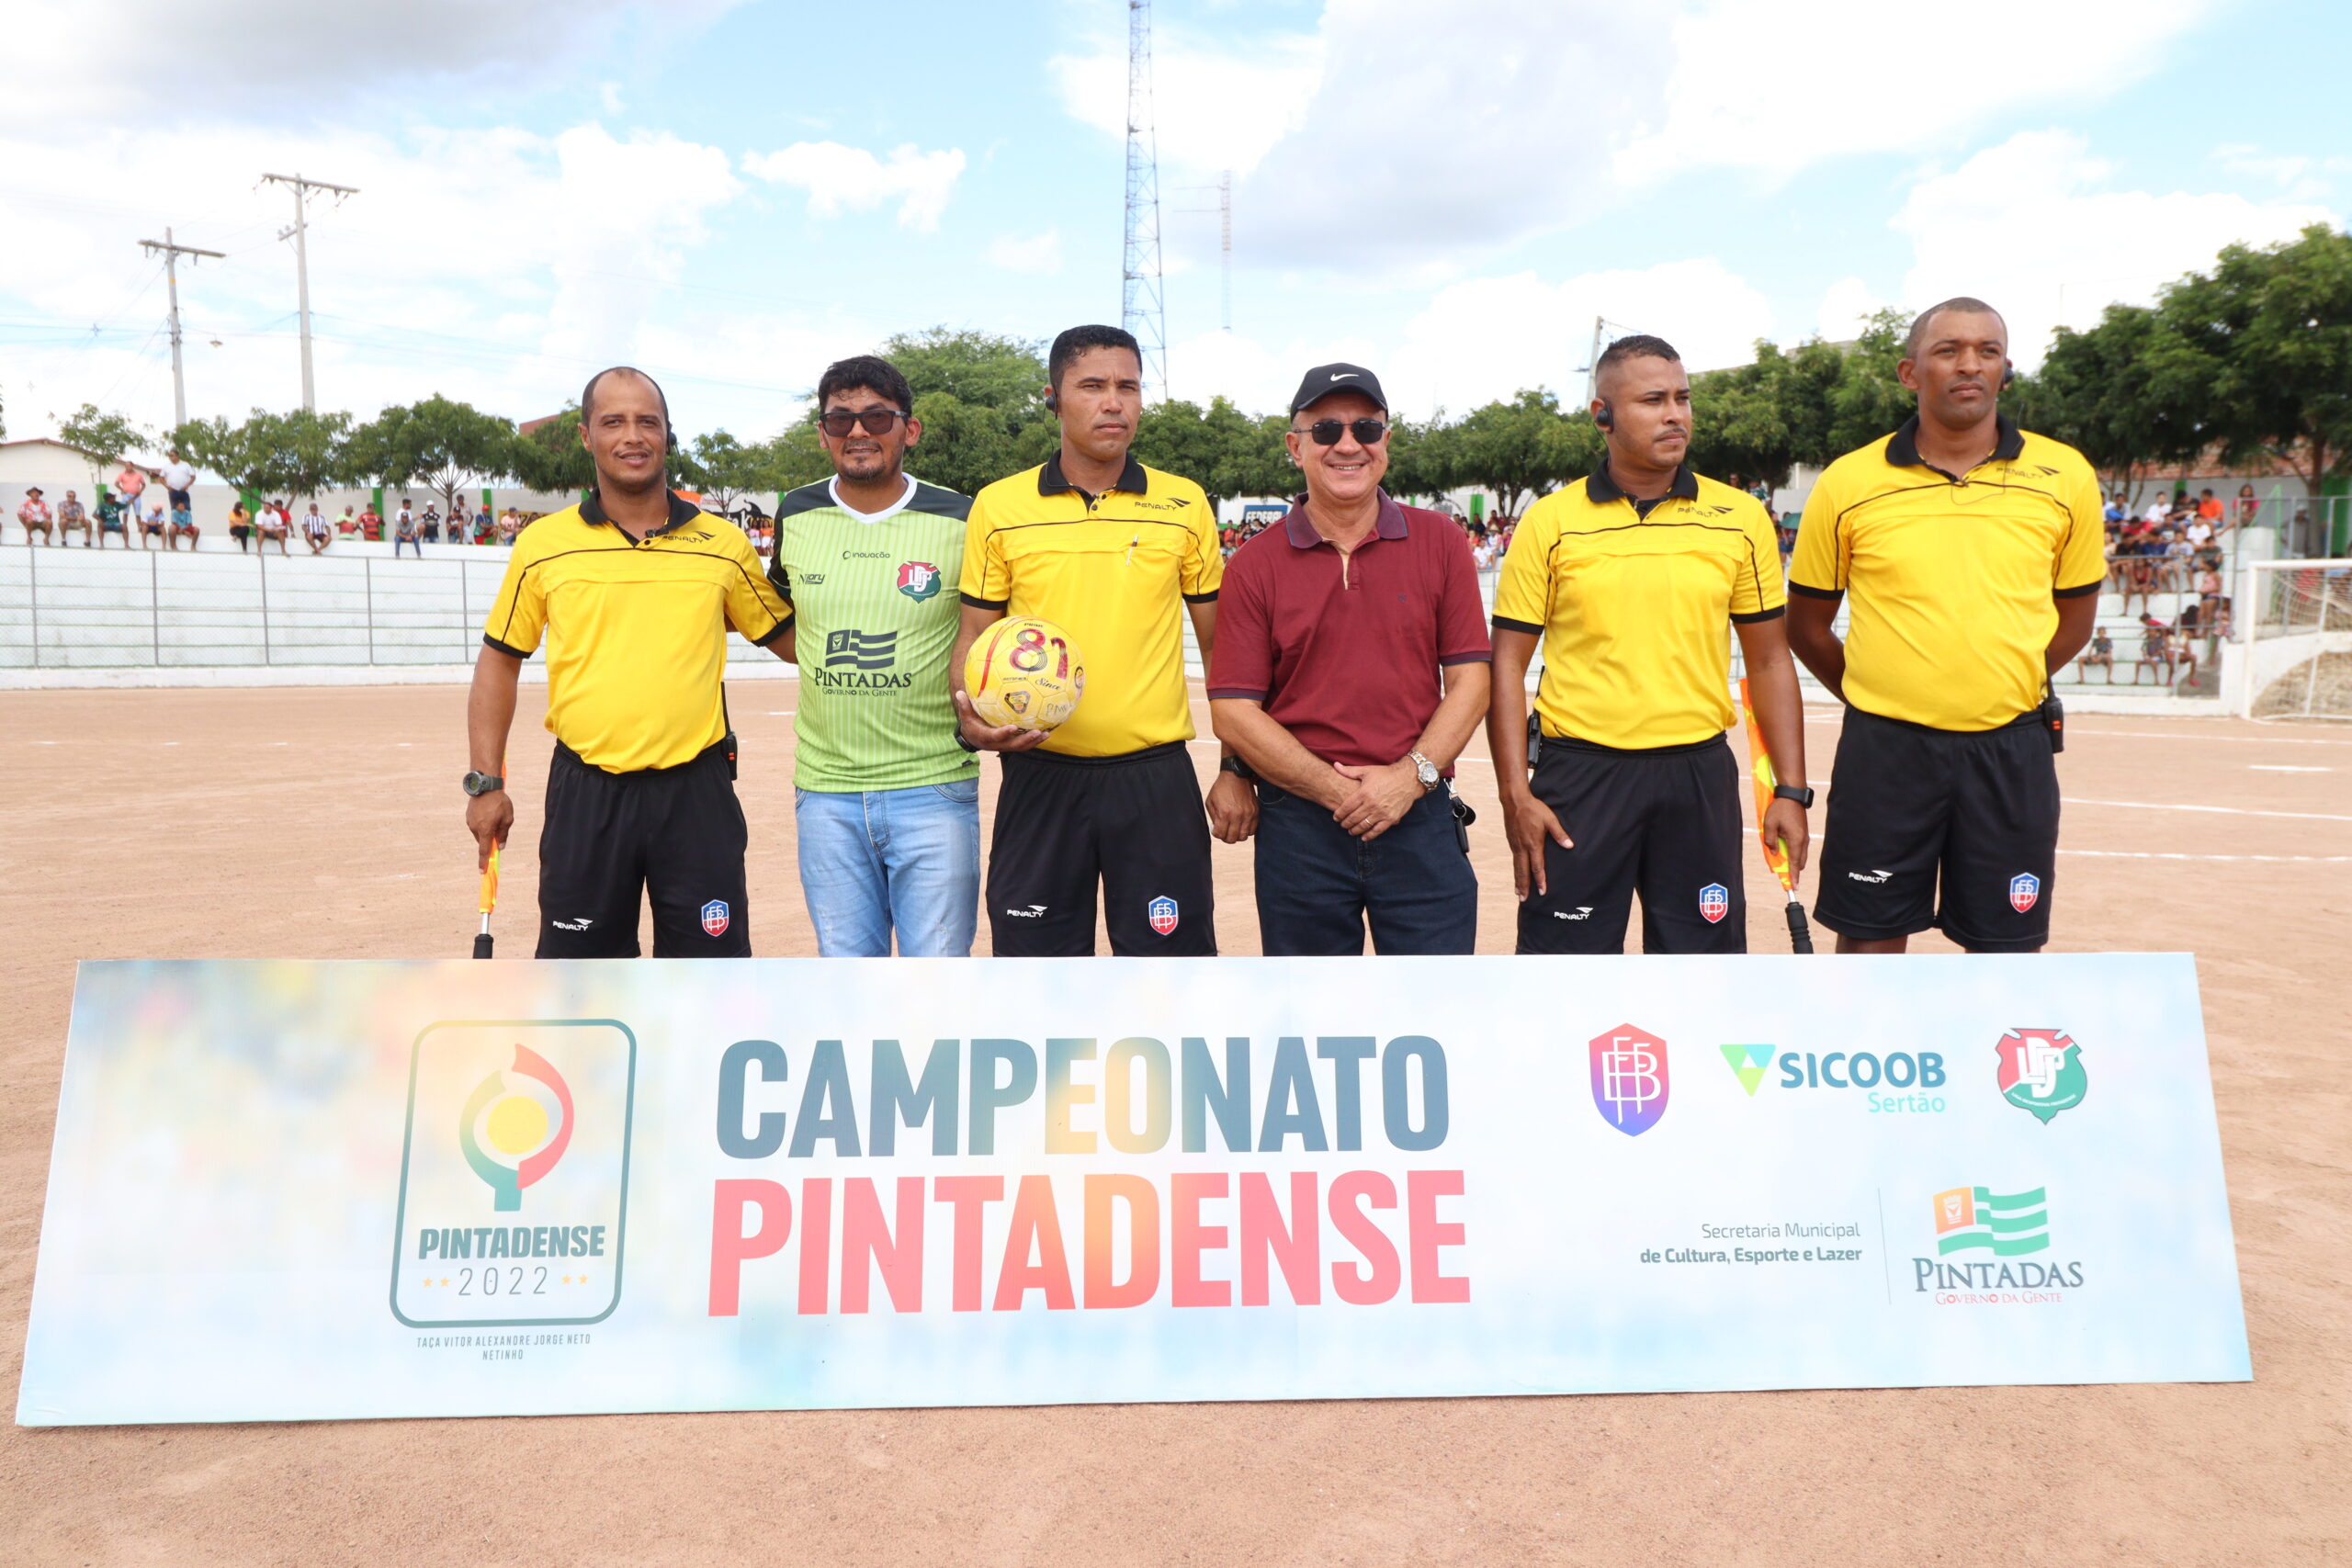 Prefeitura investe no esporte e realiza Campeonato Pintadense 2022